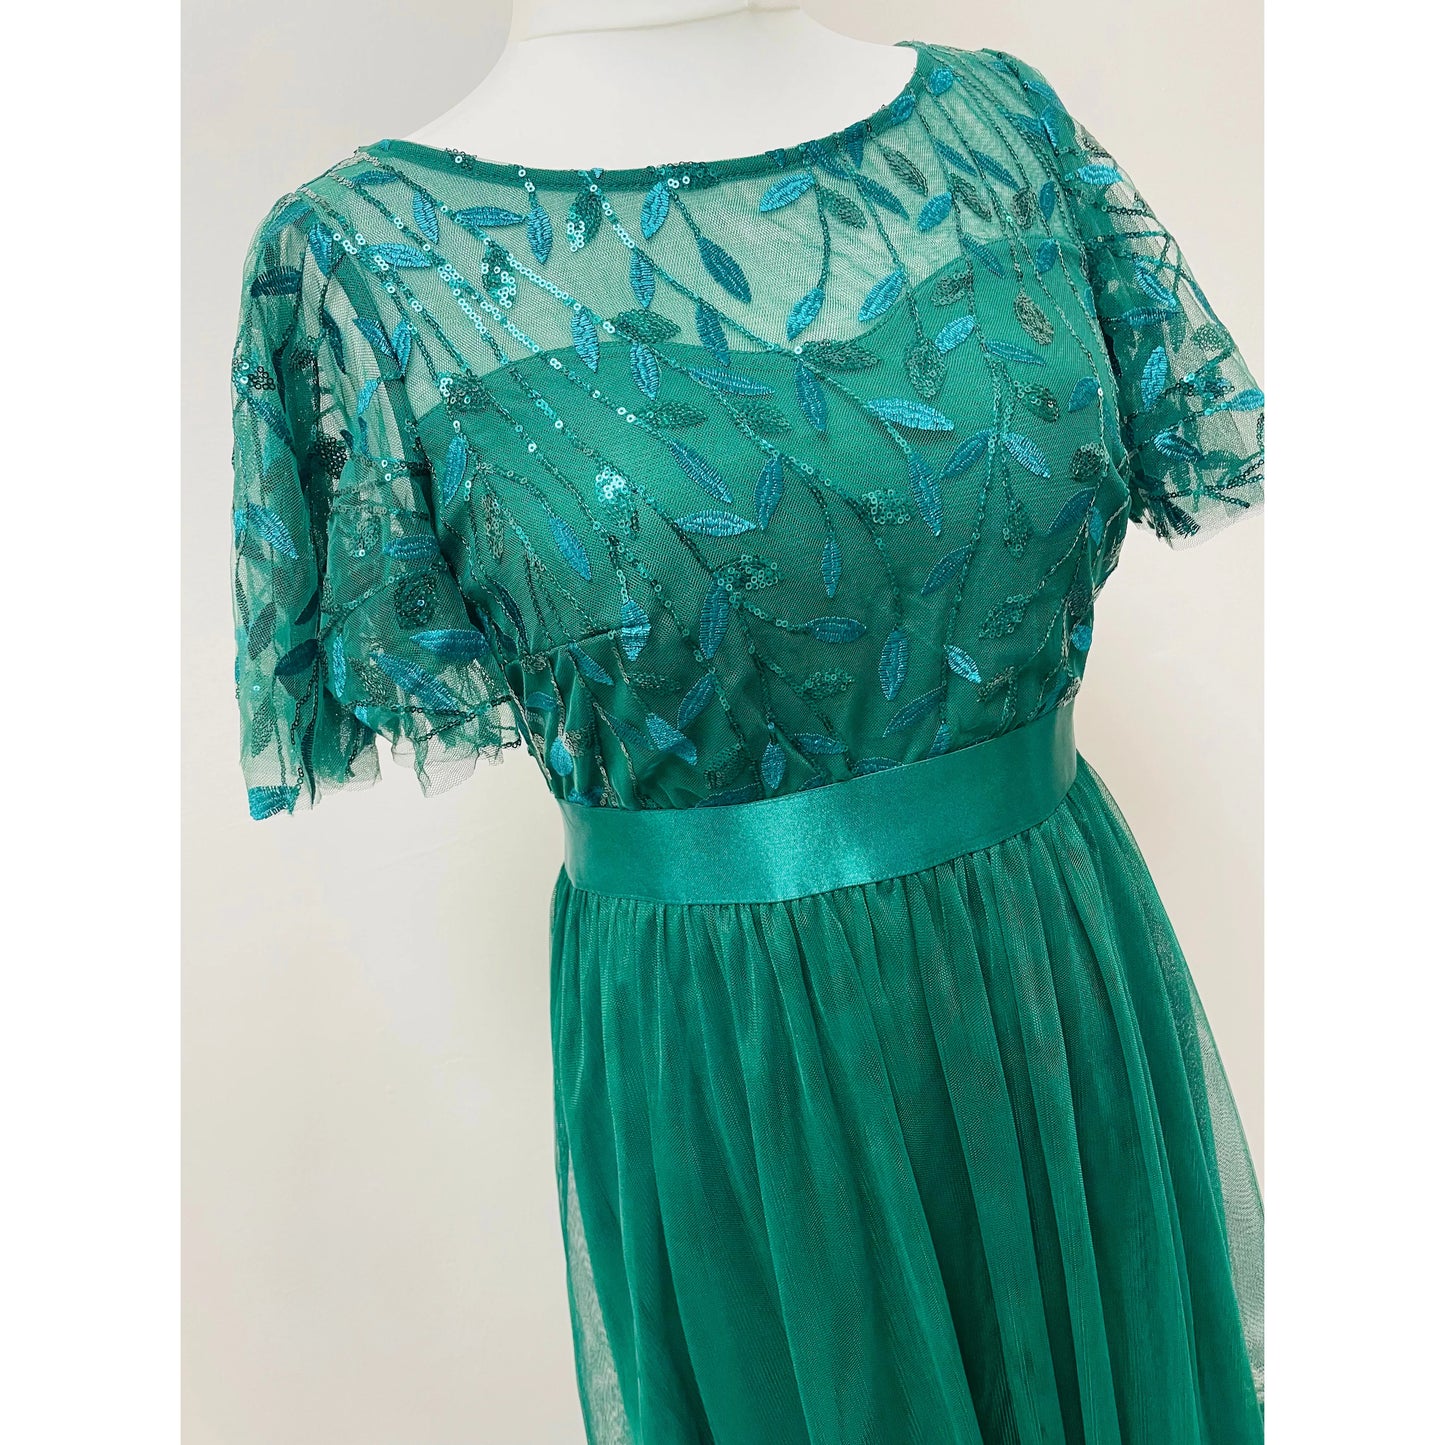 Sophia Bridemaid Dress - Emerald Green